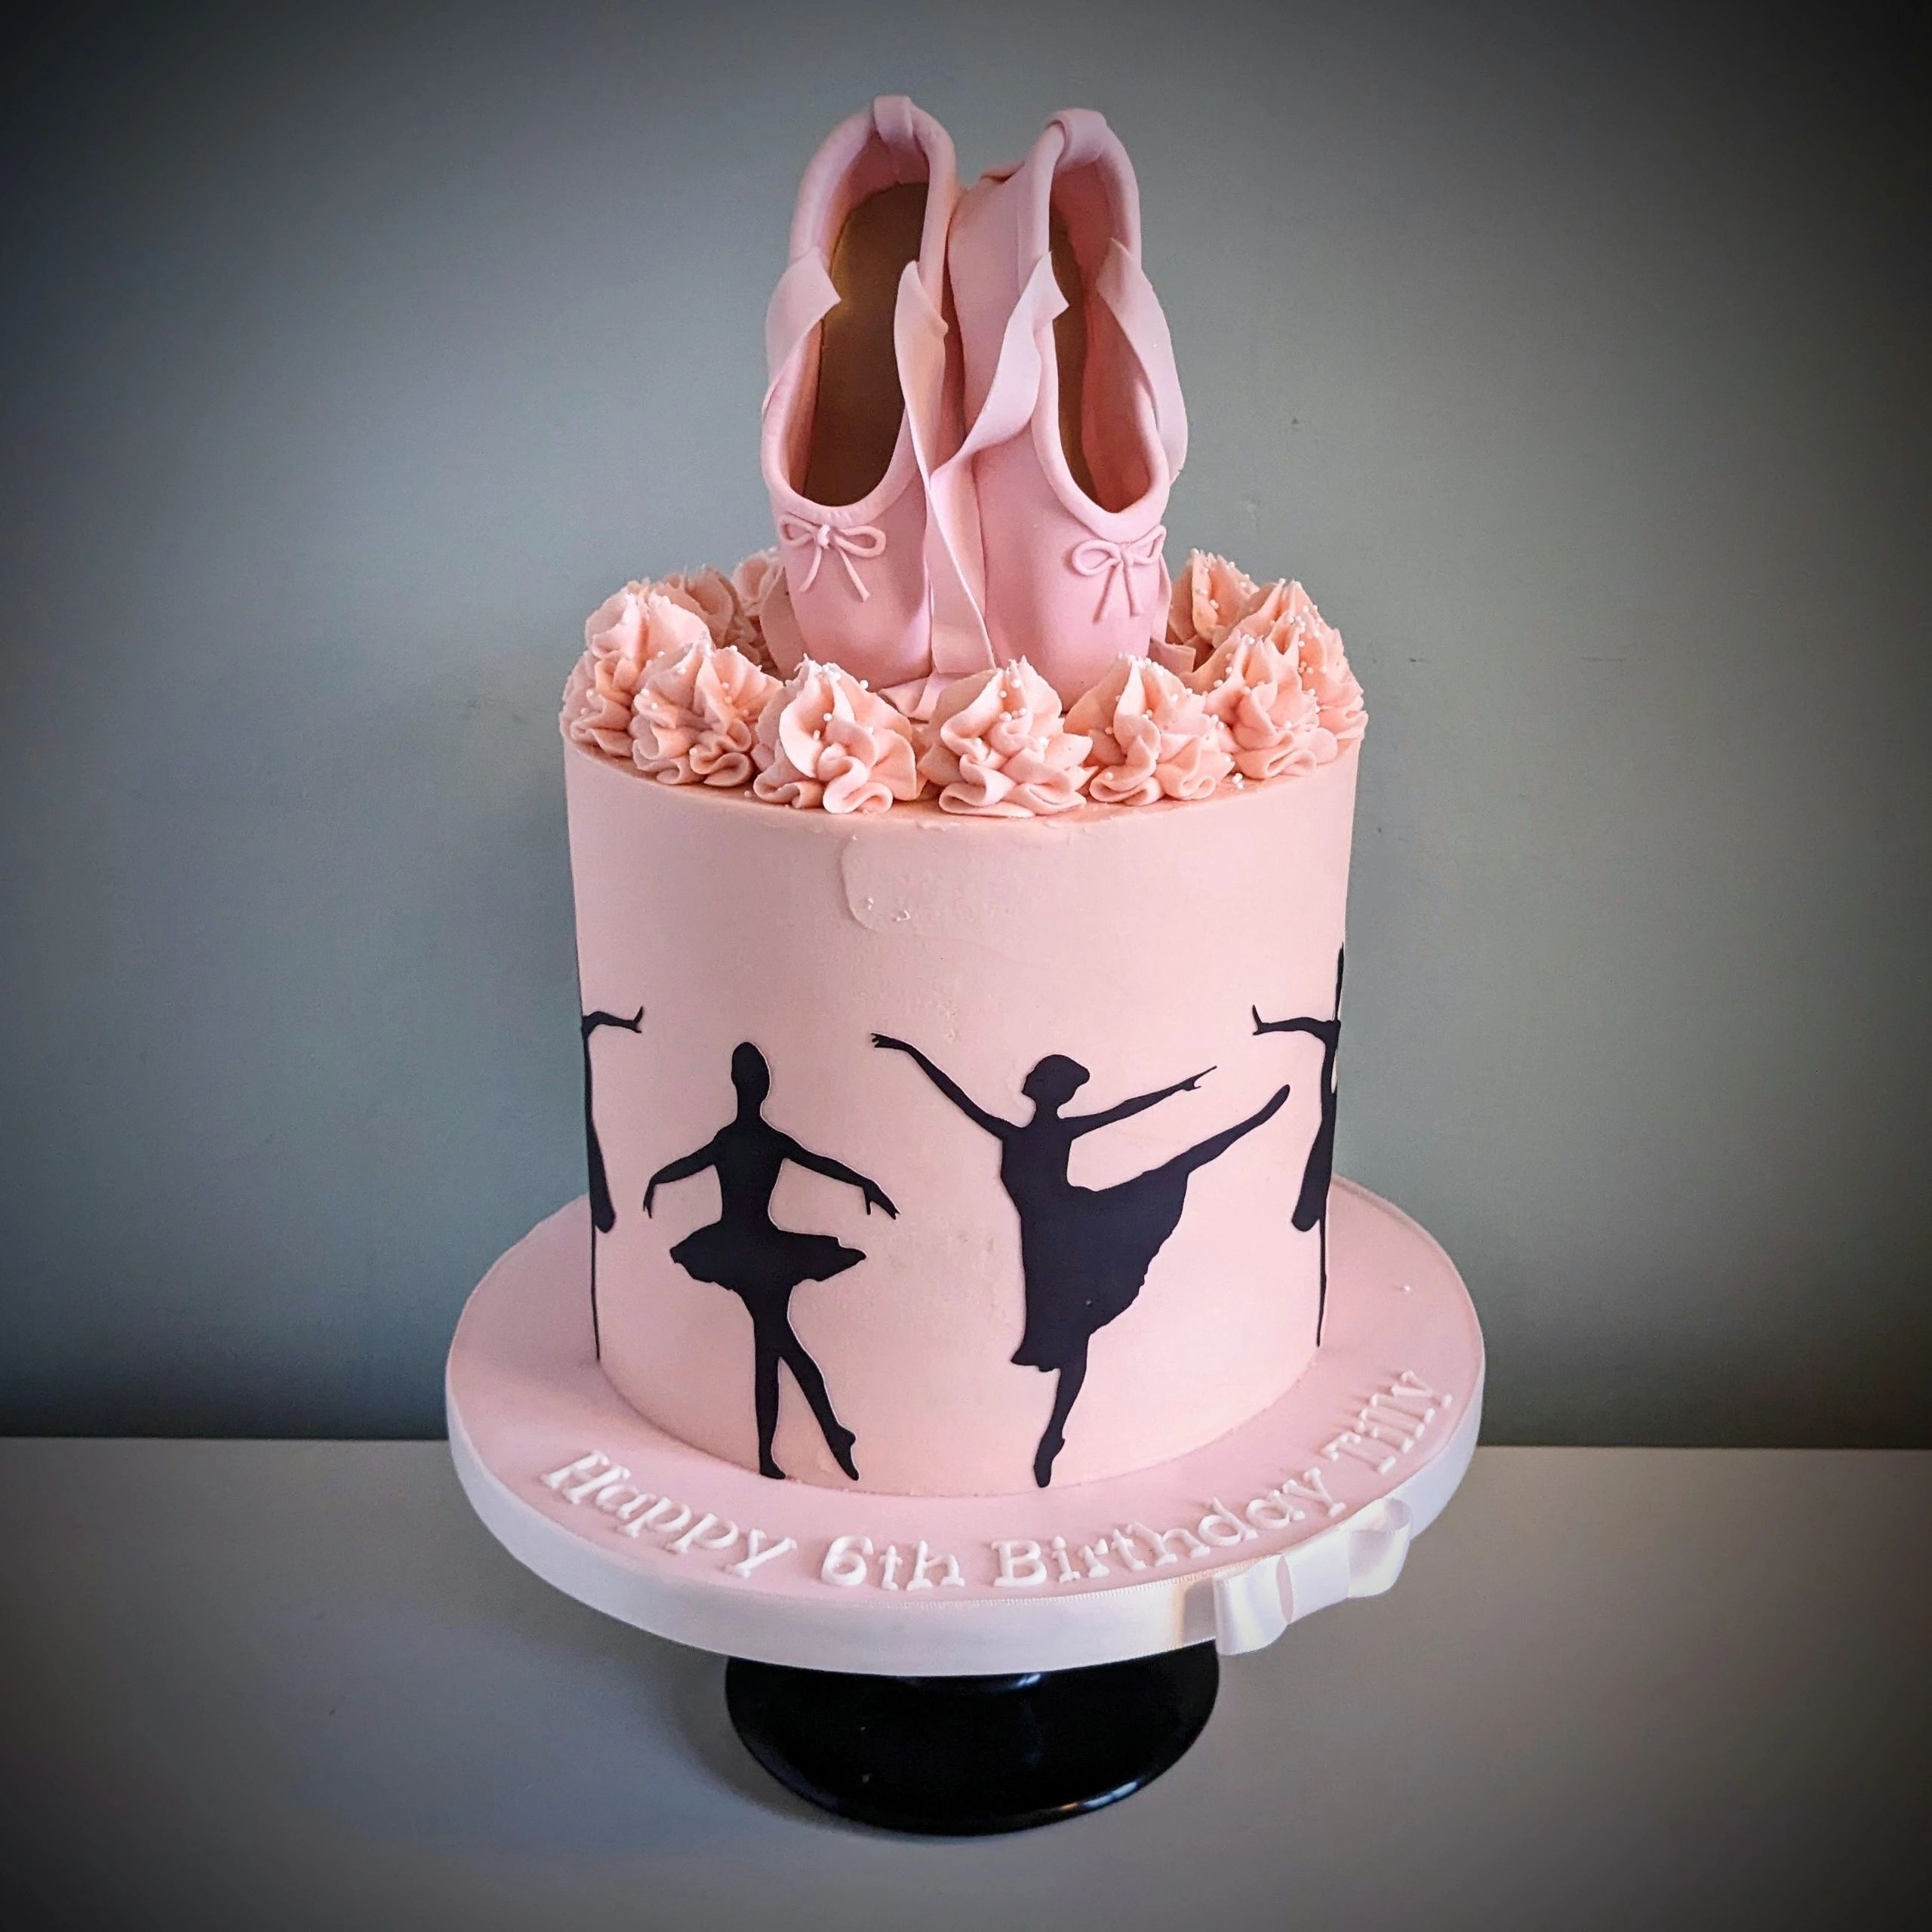 Ballerina Cake Smash - Two Years Old Birthday Session - Orange County